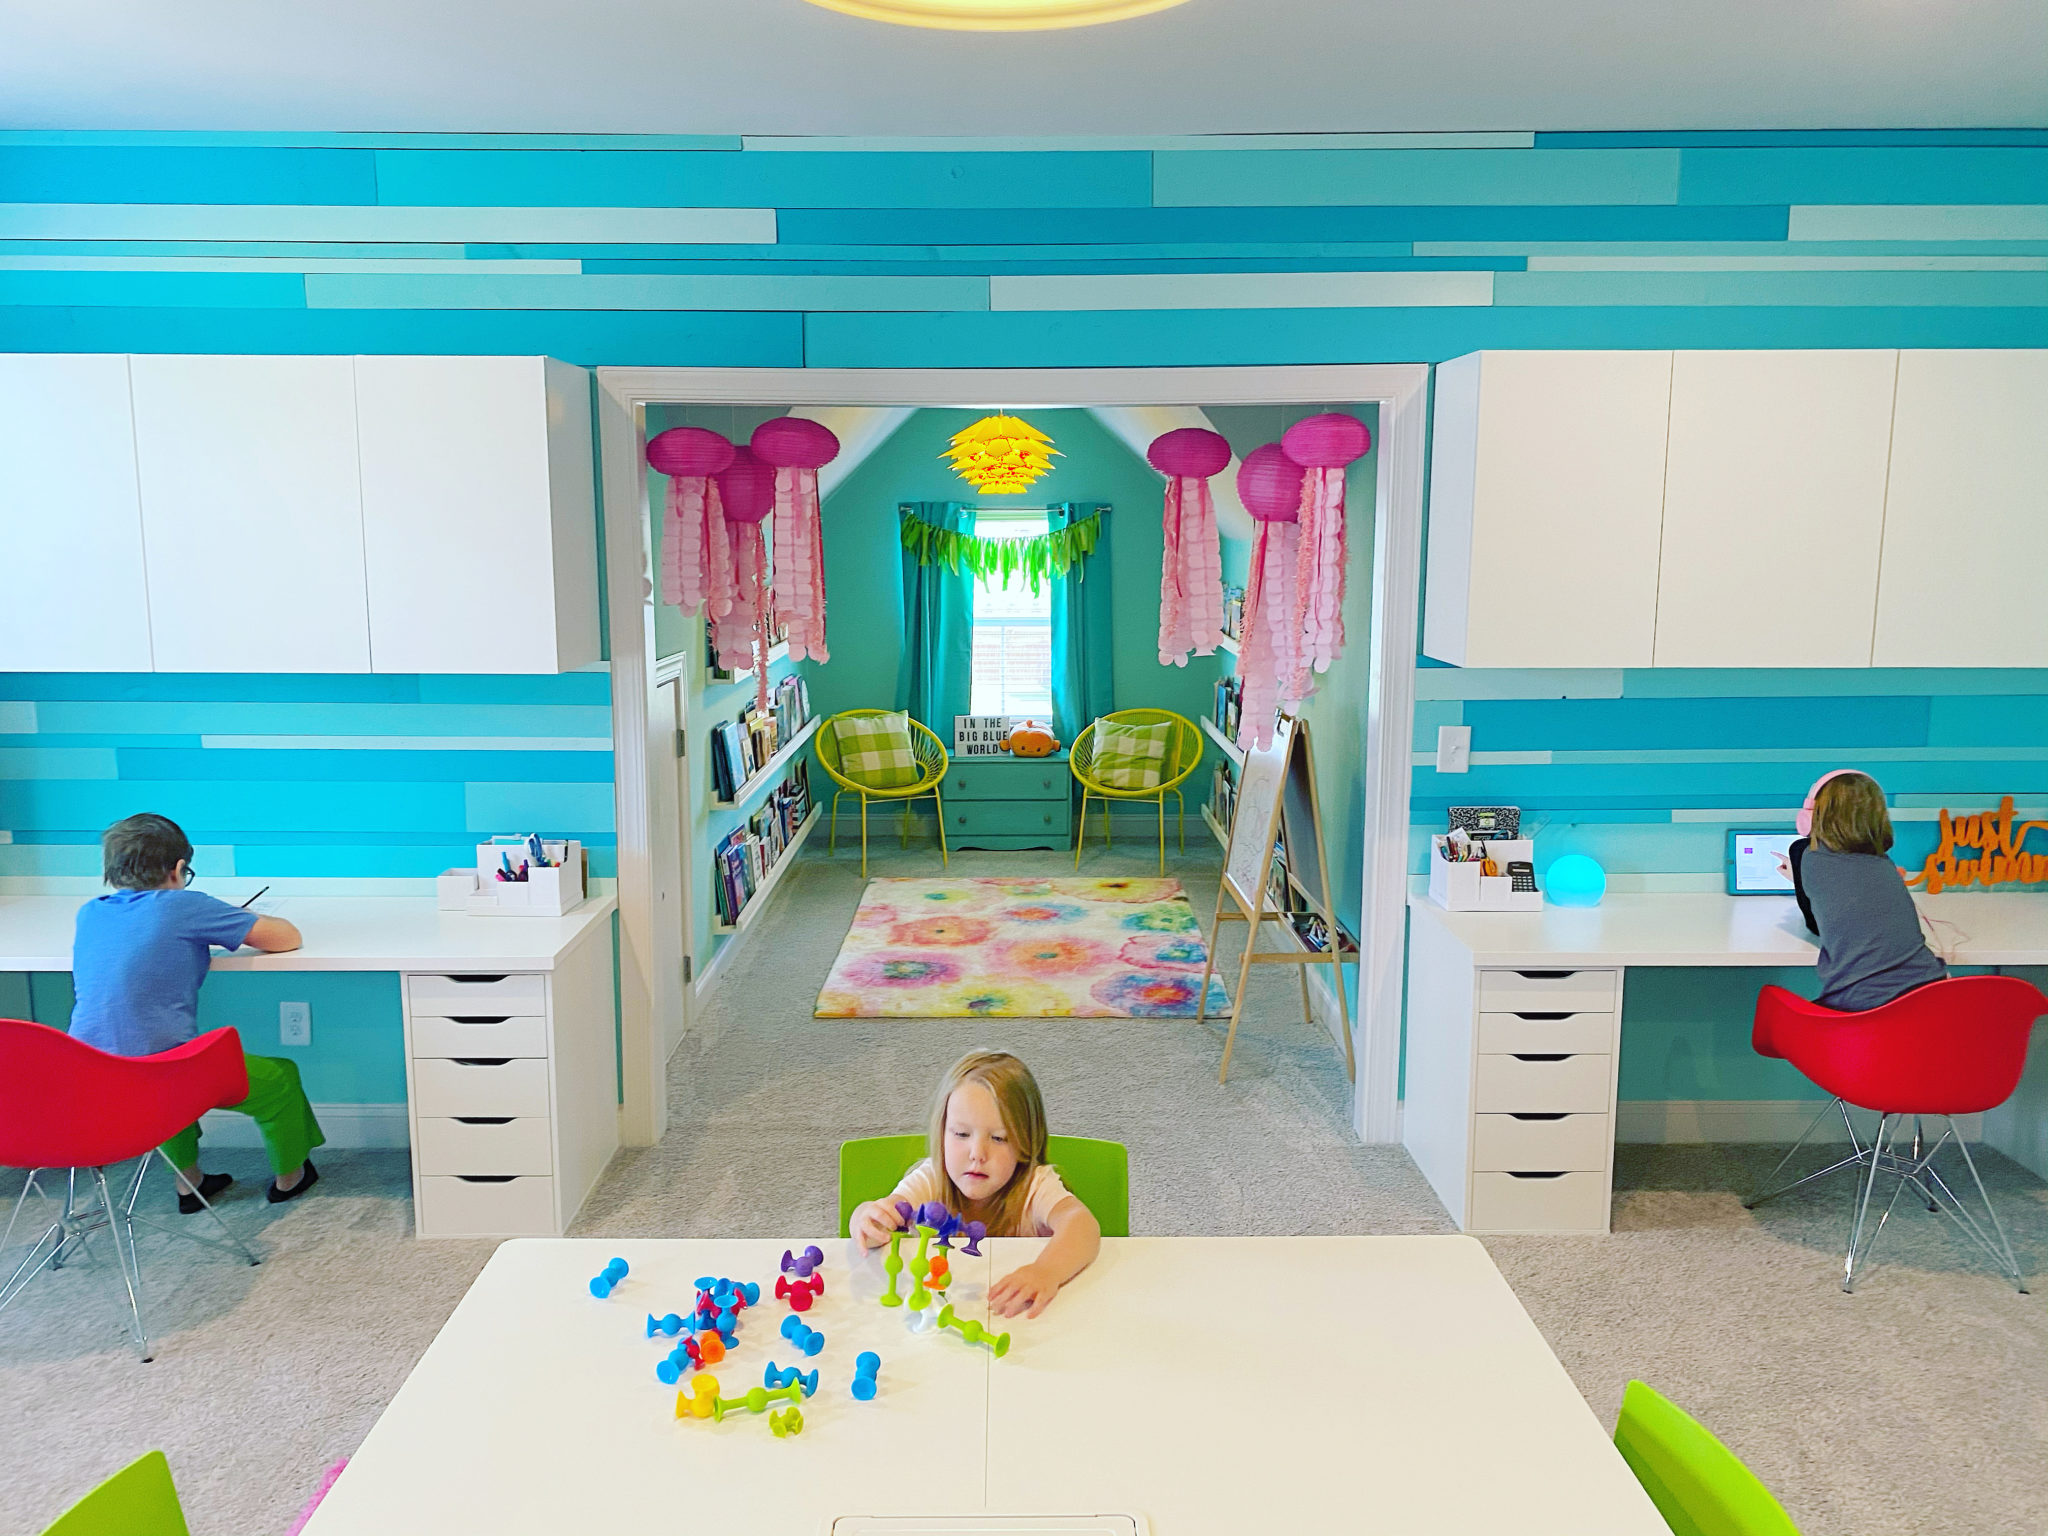 Playroom Meets Classroom
Playroom by Ginny